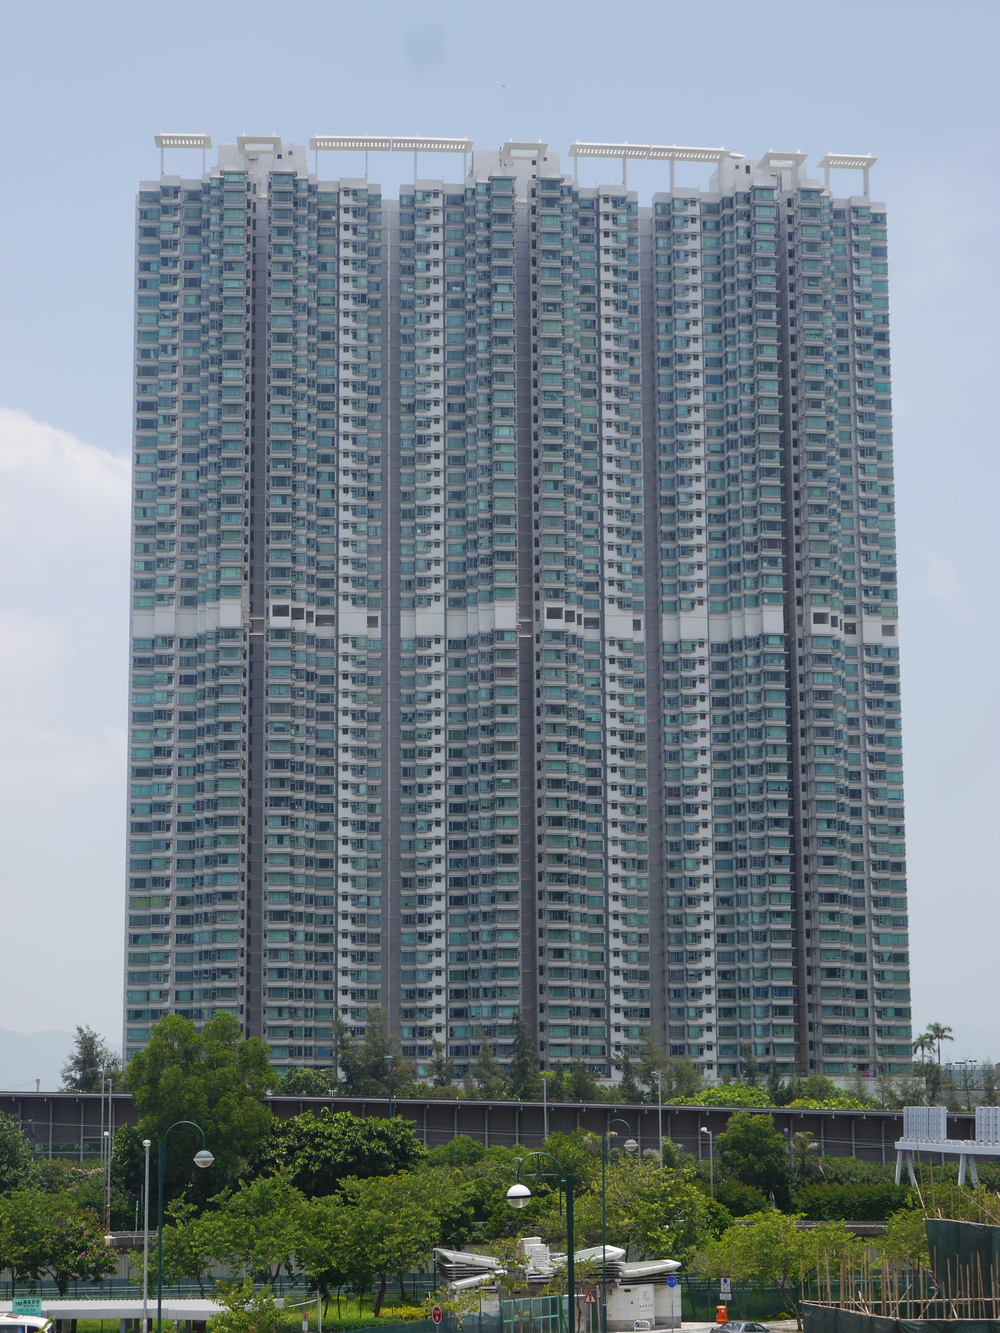  Apartment buildings. 